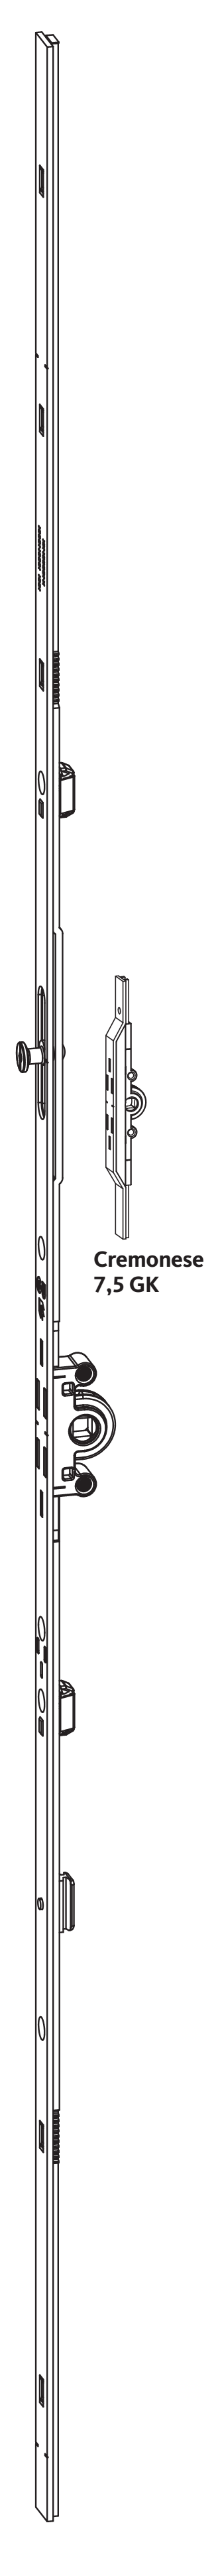 GU-ITALIA -  Cremonese UNI-JET anta a bandiera altezza maniglia variabile prolungabile senza dss - gr / dim. 1130 - entrata 7,5 - alt. man. 475 - 725 - lbb/hbb 951 - 1450